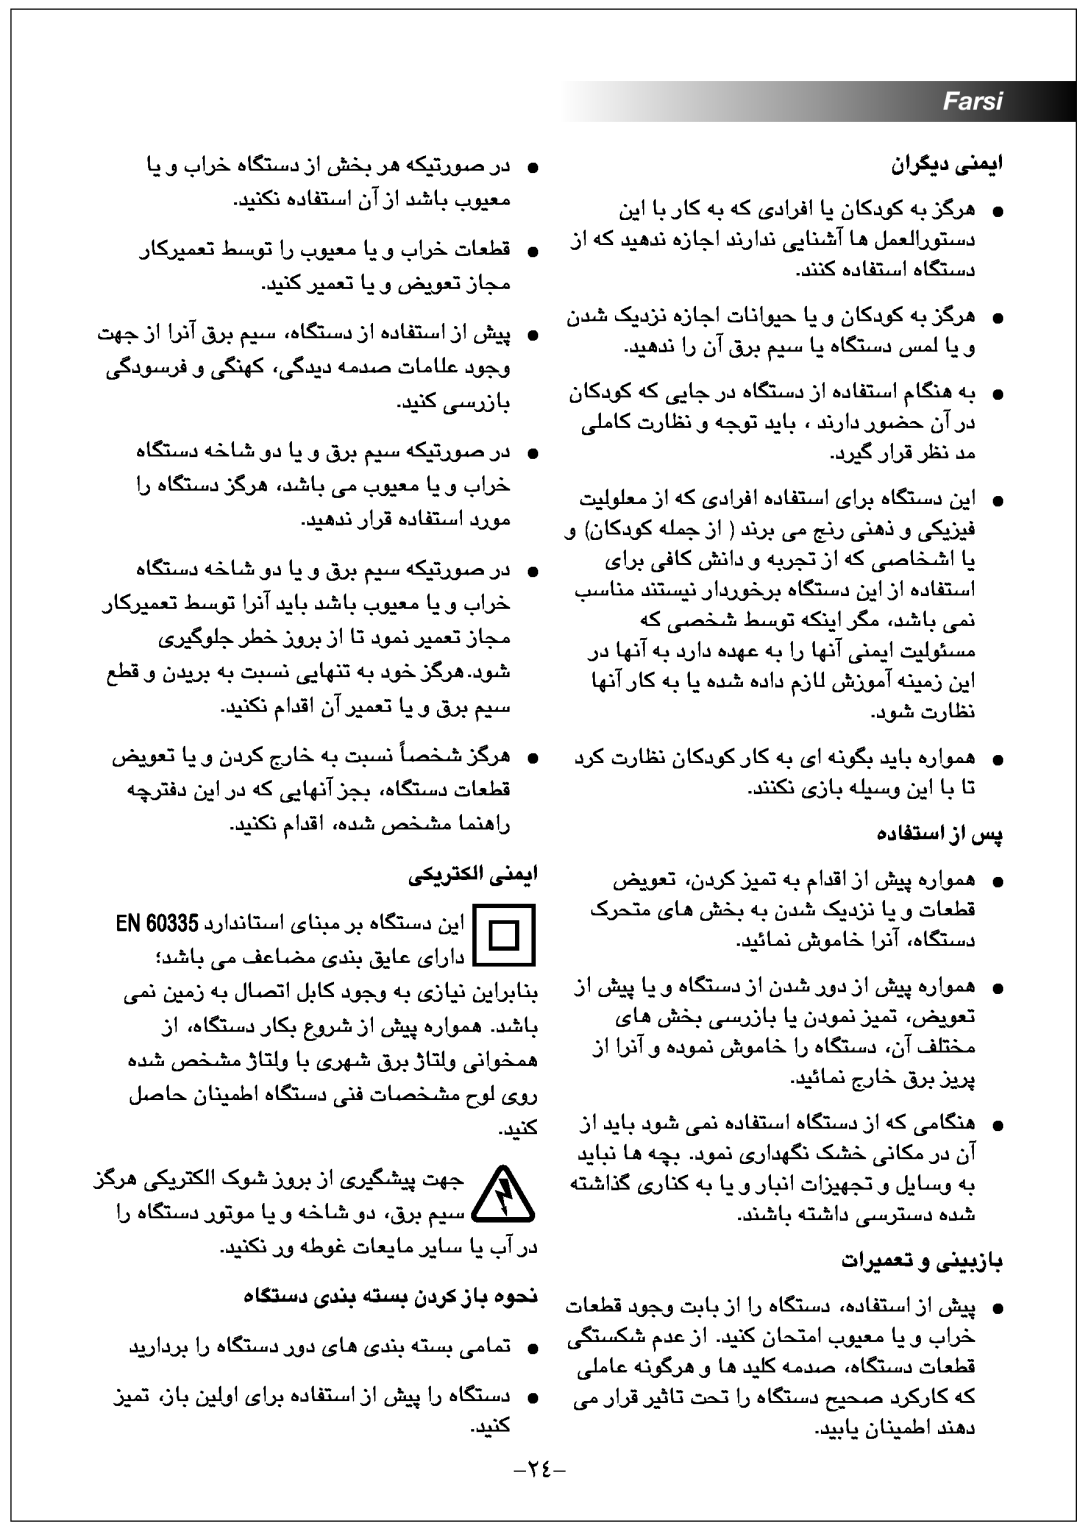 Black & Decker FX1000 manual ﯽﮑﯾﺮﺘﮑﻟﺍ ﯽﻨﻤﯾﺍ, ﻩﺎﮕﺘﺳﺩ ﯼﺪﻨﺑ ﻪﺘﺴﺑ ﻥﺩﺮﮐ ﺯﺎﺑ ﻩﻮﺤﻧ, Farsi, ﻥﺍﺮﮕﯾﺩ ﯽﻨﻤﯾﺍ, ﻩﺩﺎﻔﺘﺳﺍ ﺯﺍ ﺲﭘ 